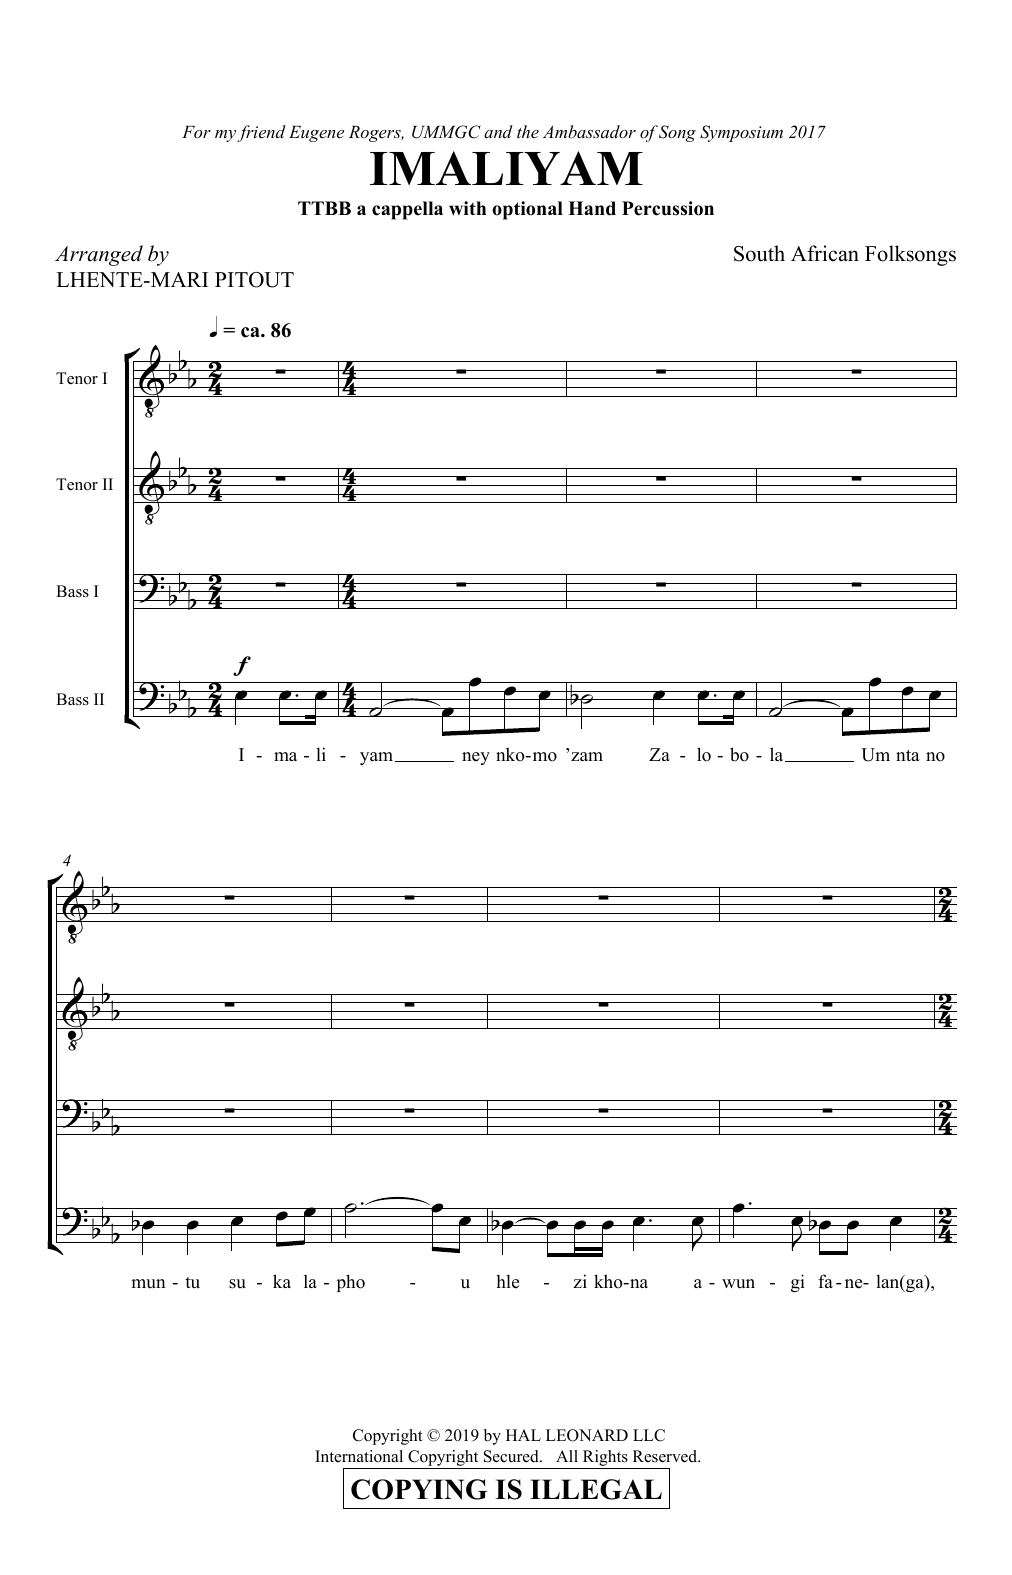 South African Folksong Imaliyam (arr. Lhente-Mari Pitout) Sheet Music Notes & Chords for TTBB Choir - Download or Print PDF